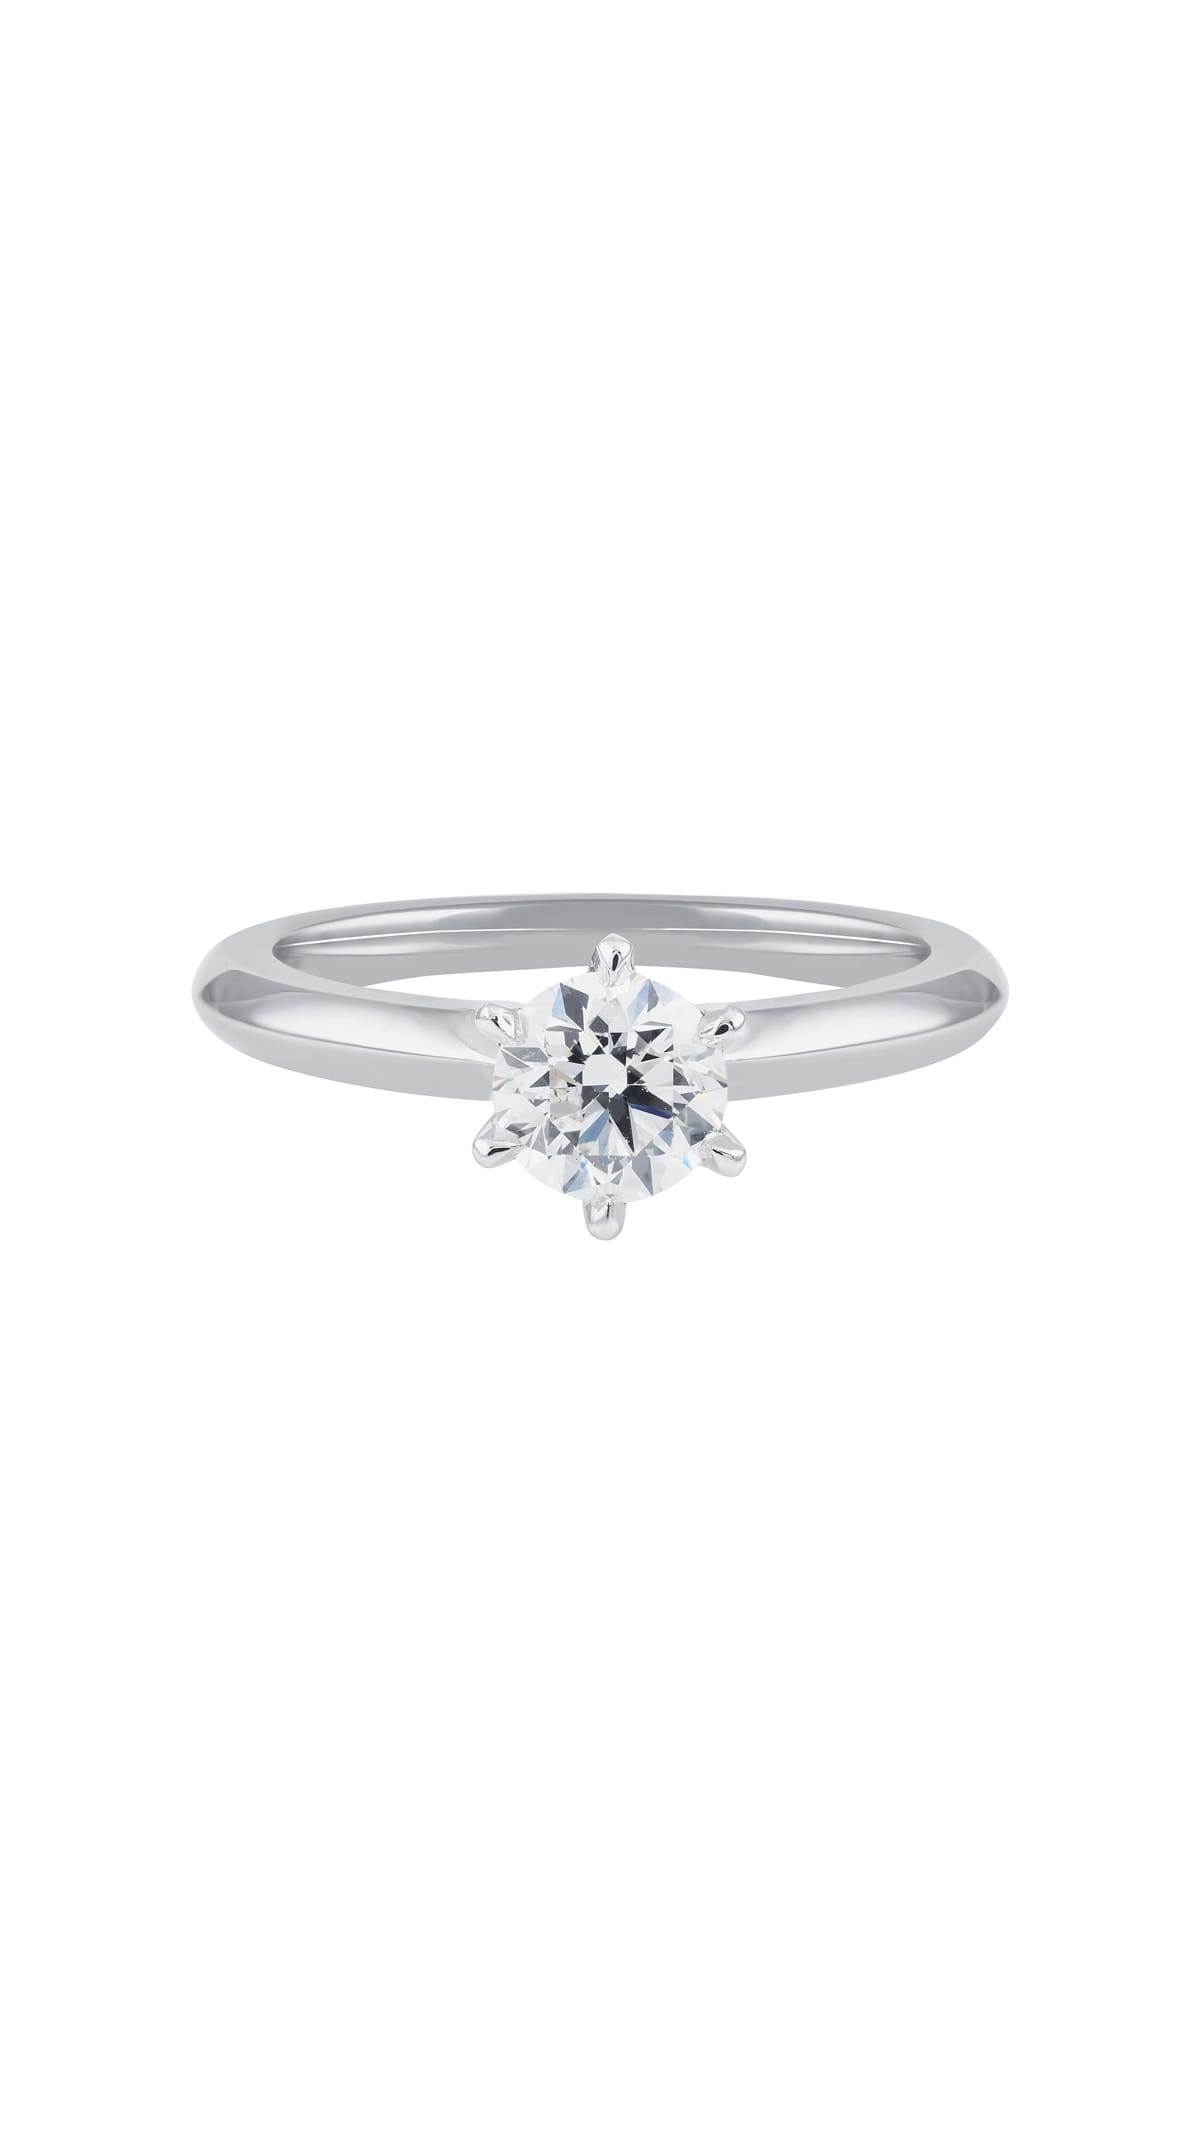 LeGassick 0.70 Carat Diamond Solitaire Engagement Ring available at LeGassick Diamonds and Jewellery Gold Coast, Australia.